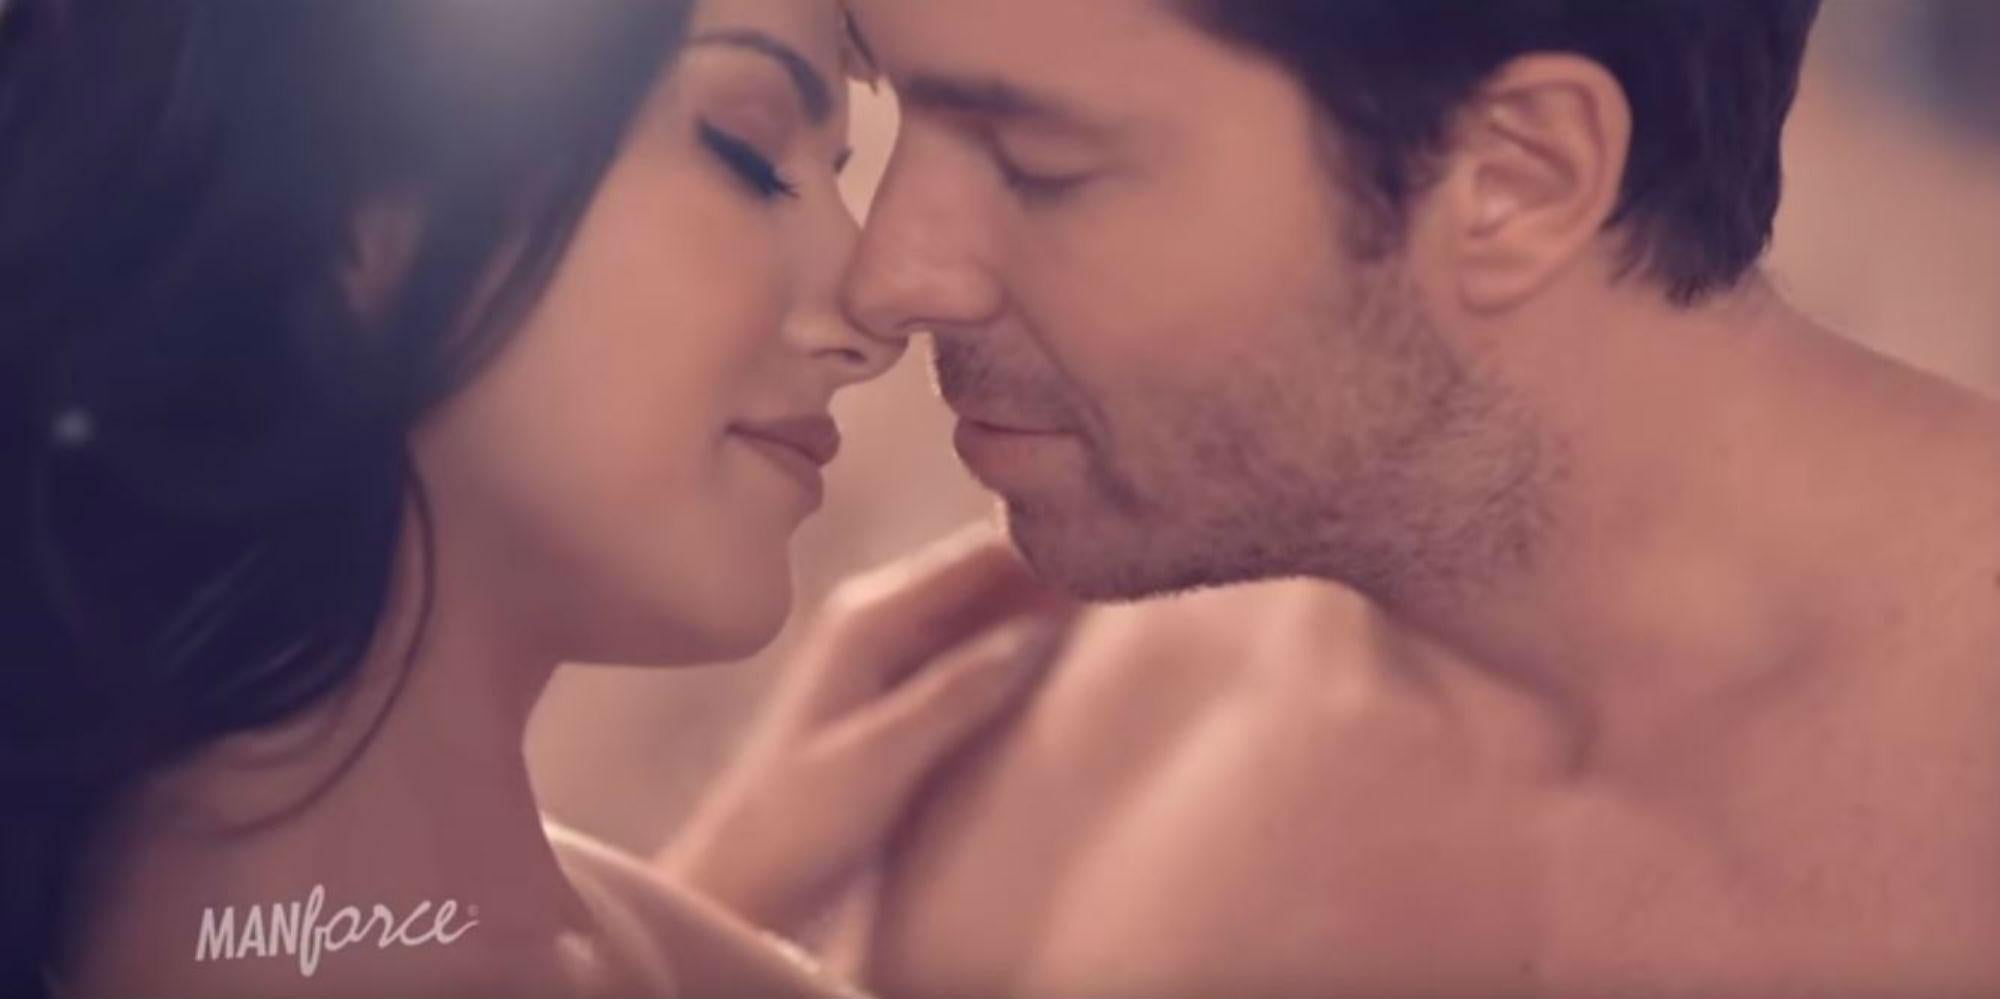 Sony Liony Sex Vidio Kondom - A condom advert featuring an ex porn star is causing fury in India ...